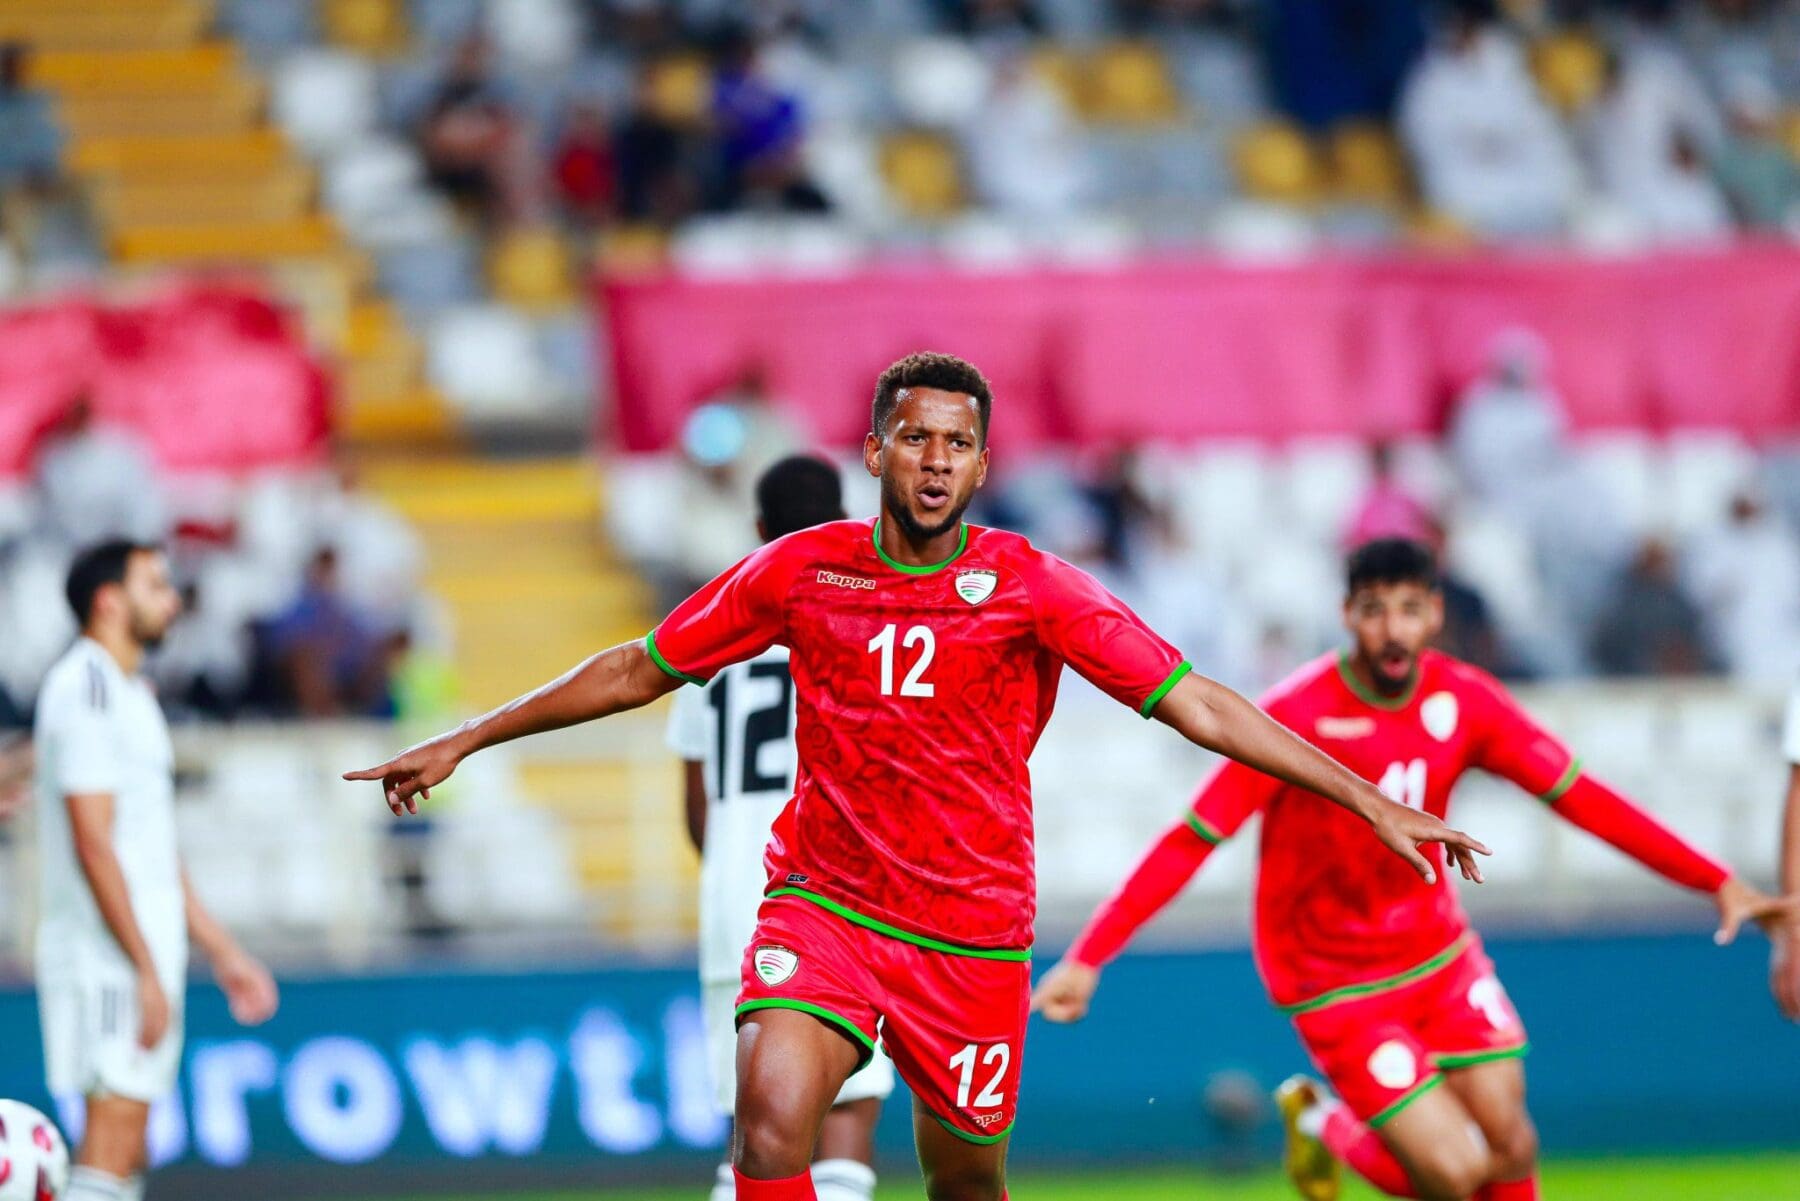 مباراة عمان والإمارات